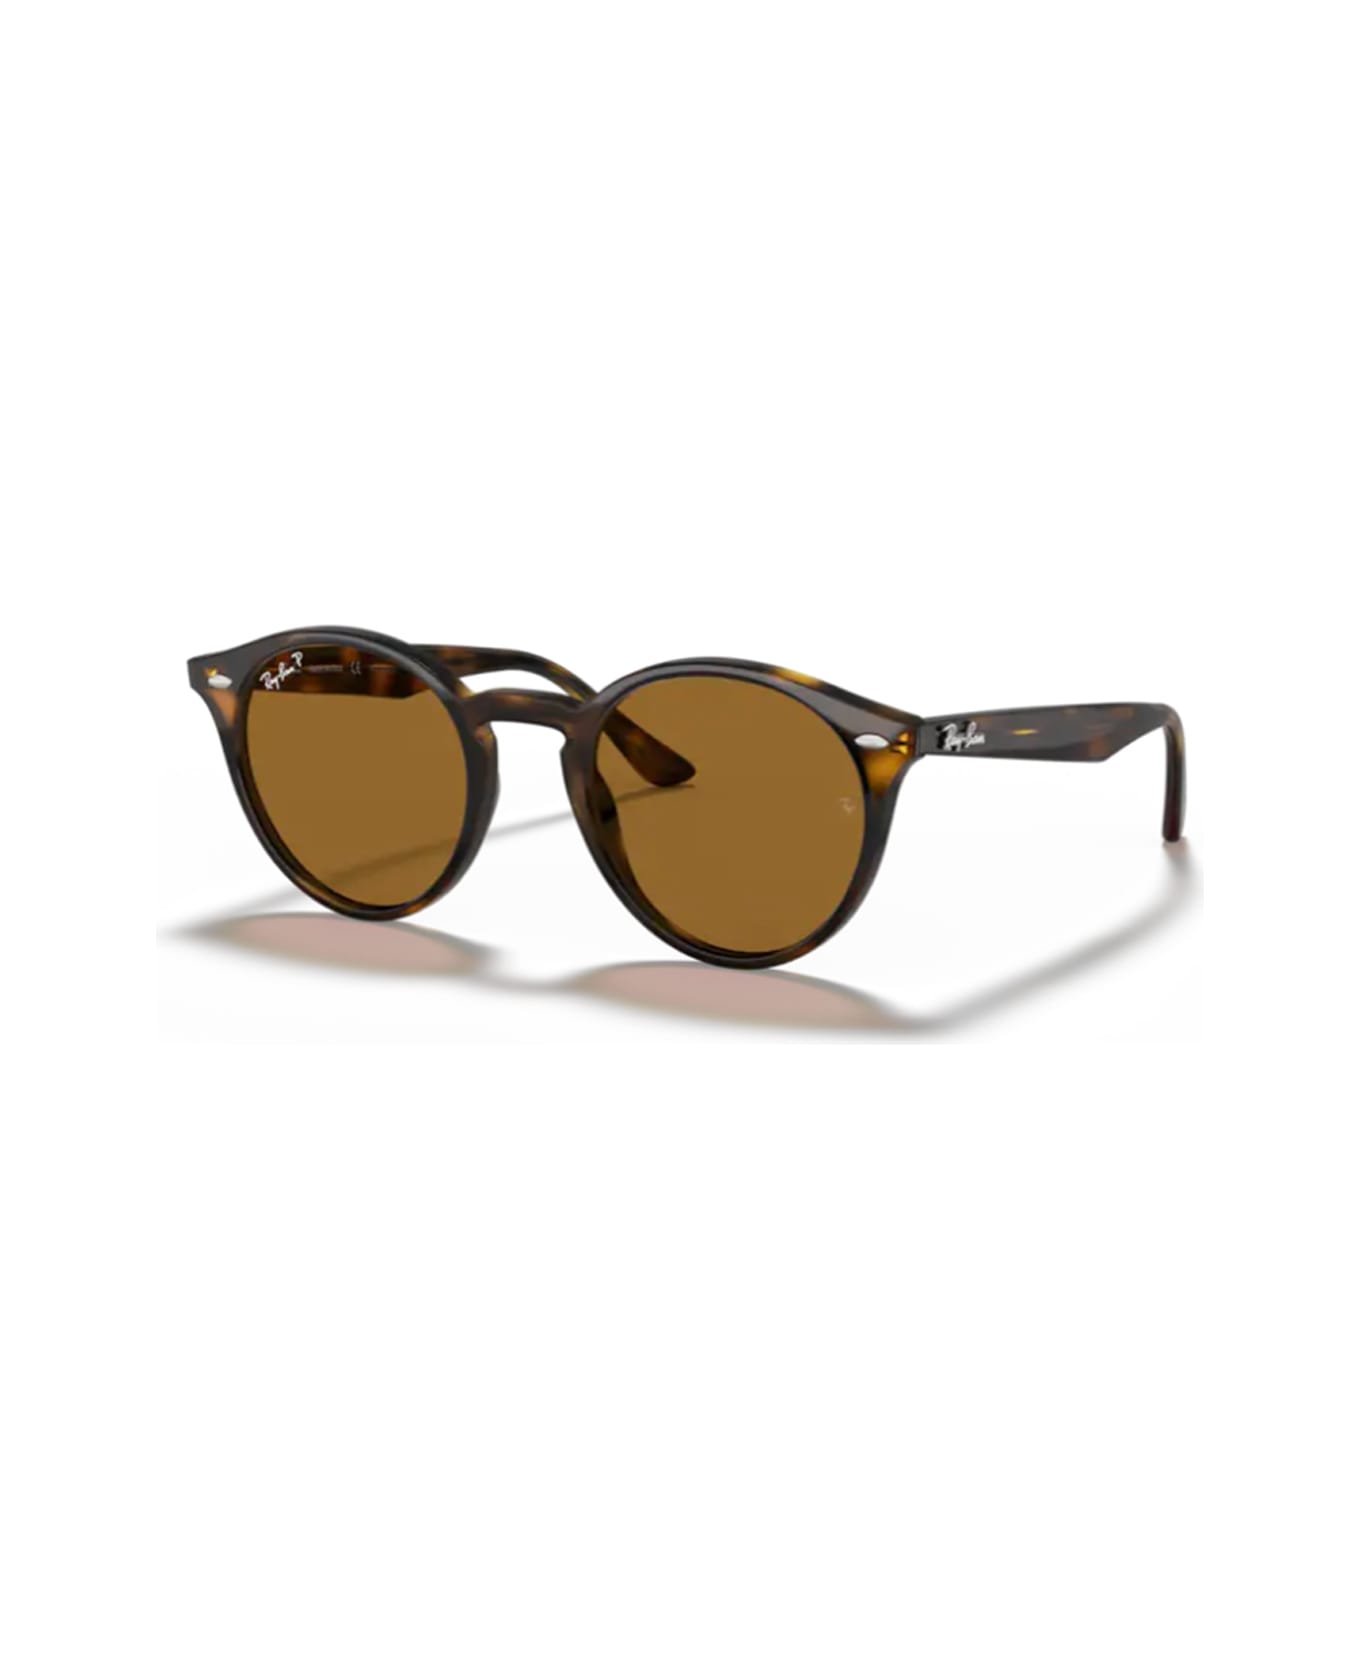 Ray-Ban Rb2180 Sunglasses - Marrone